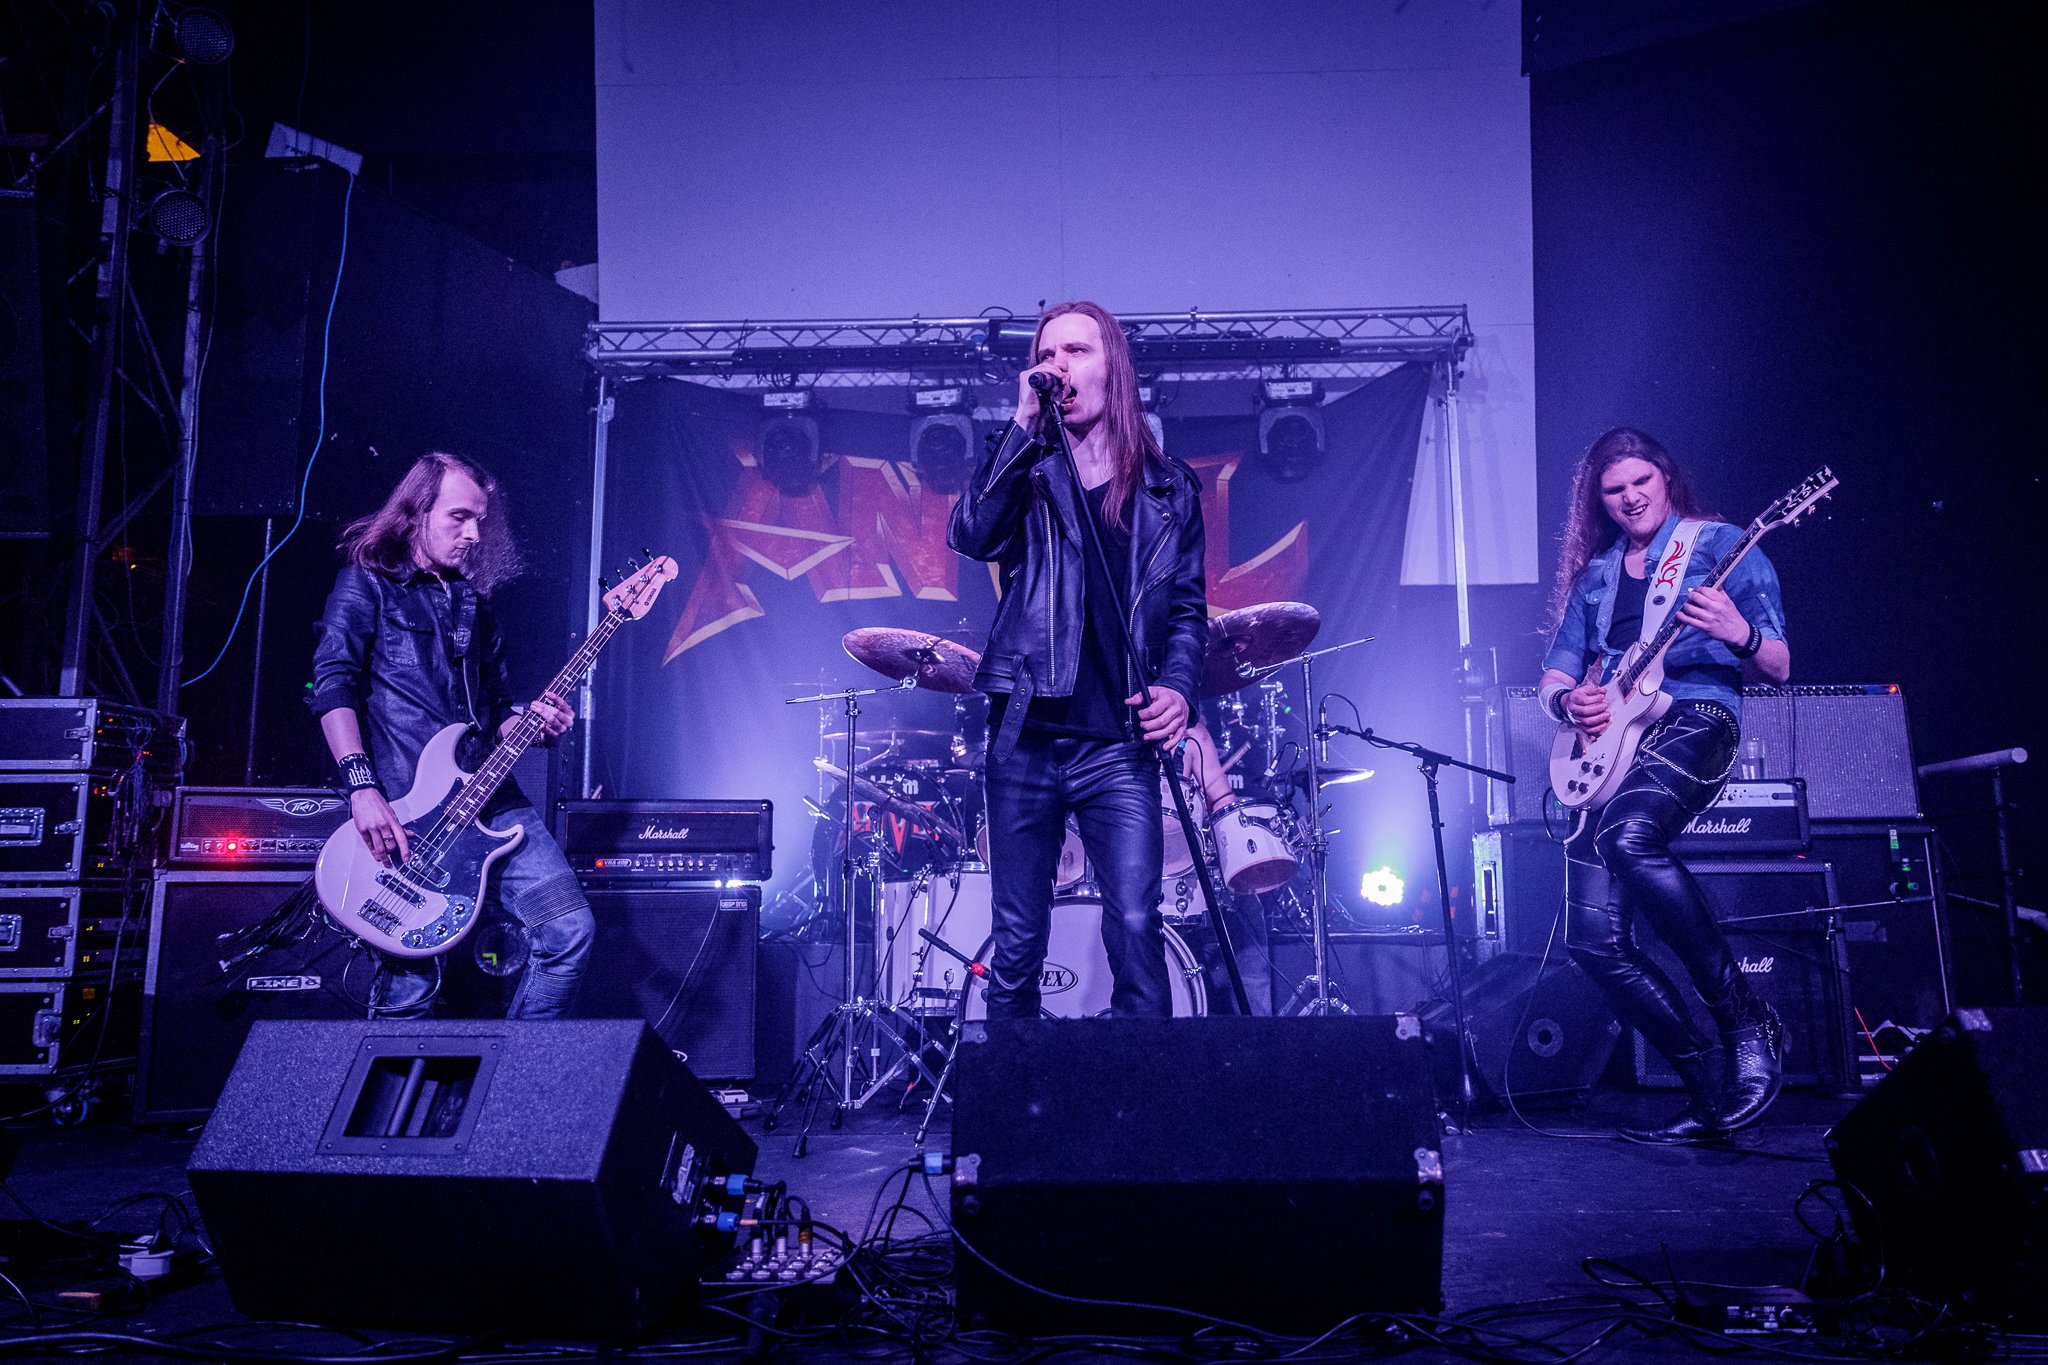  Midnight Prophecy at Pure Rock, Wigan on February 11th 2018 ©Johann Wierzbicki 